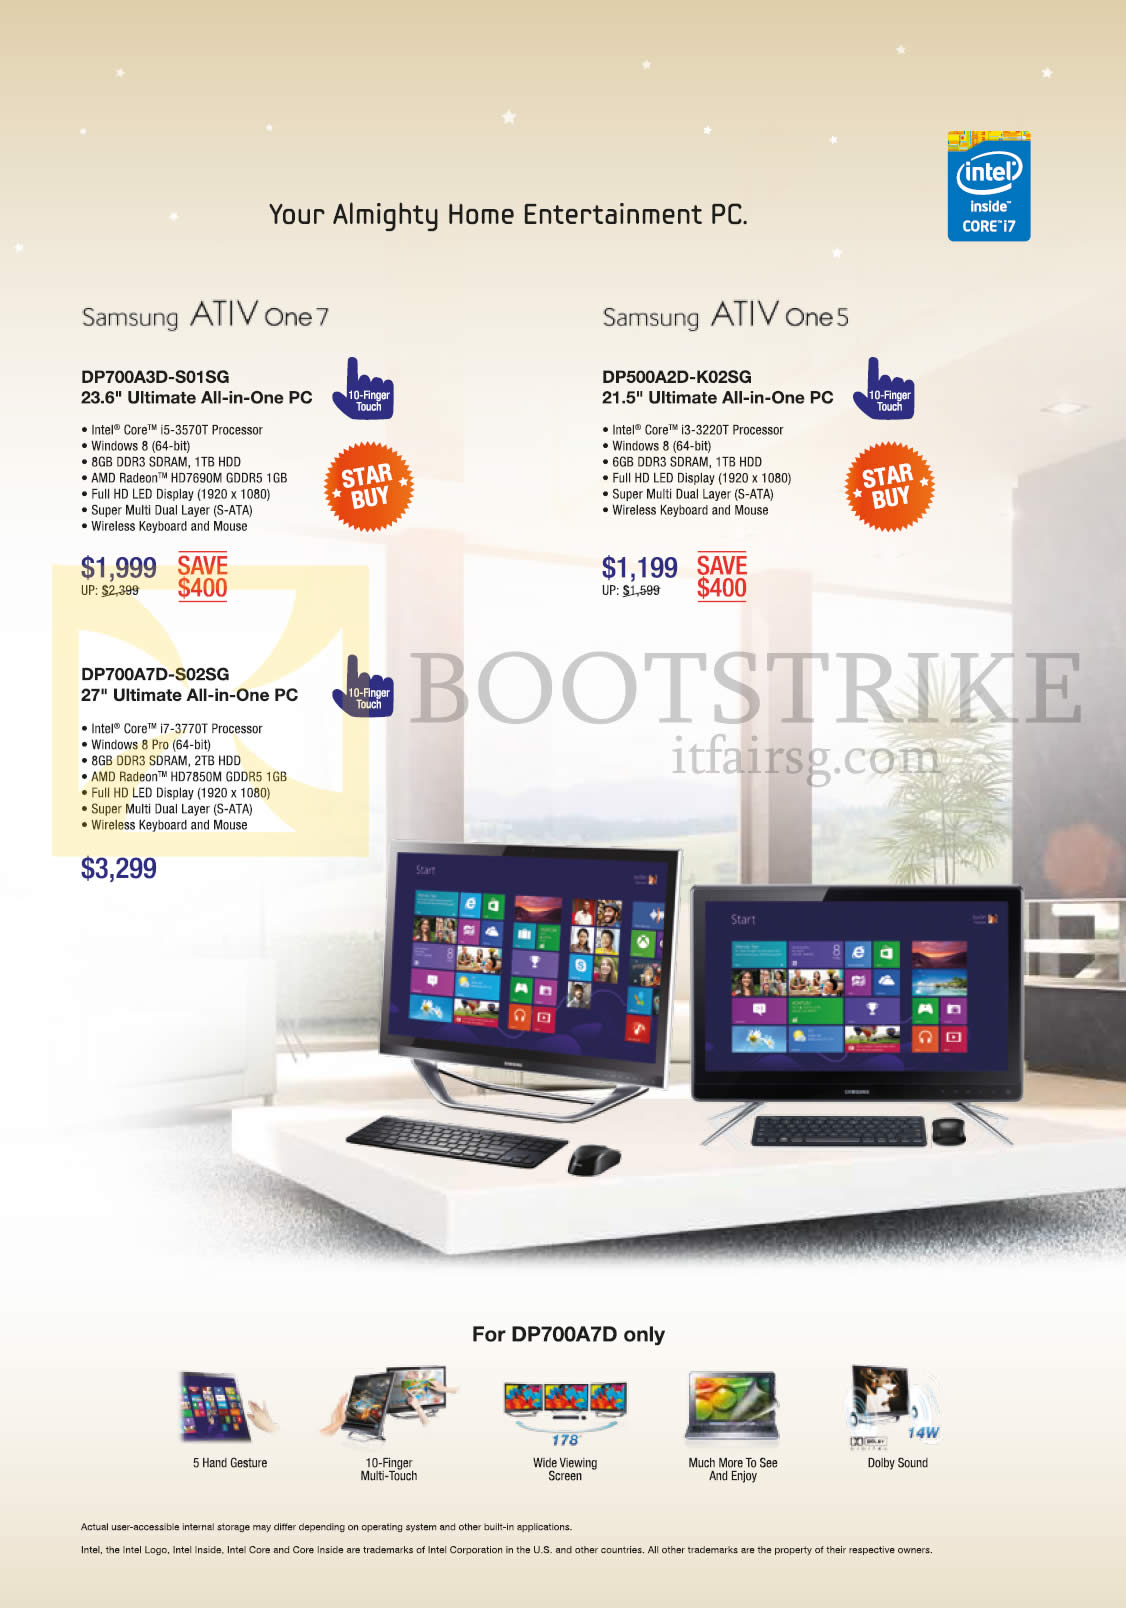 SITEX 2013 price list image brochure of Samsung AIO Desktop PCs ATIV One 7 DP700A3D-S01Sg, One 5 DP500A2D-K02SG, DP700A7D-S02SG